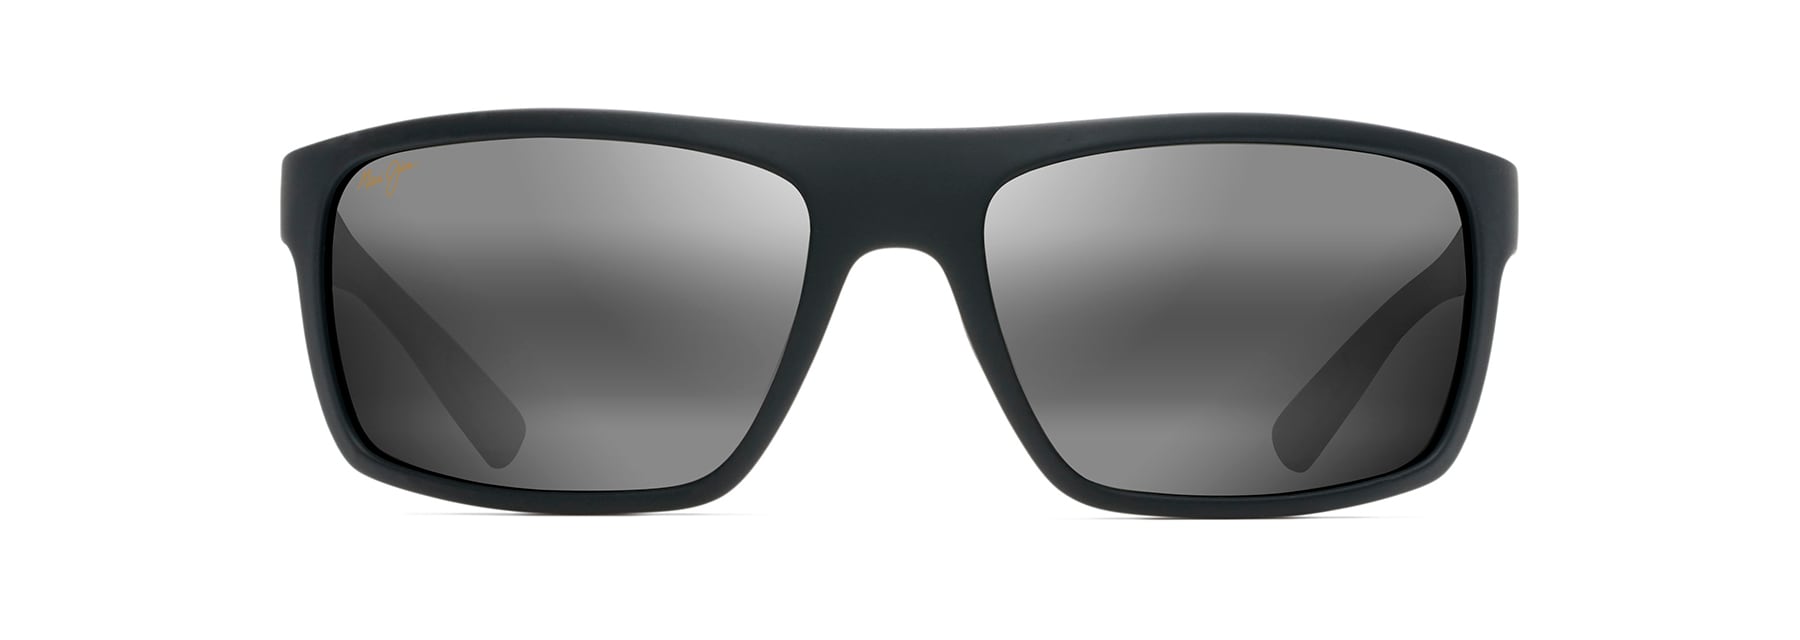 Oakley Sunglasses Discontinued Models « Heritage Malta